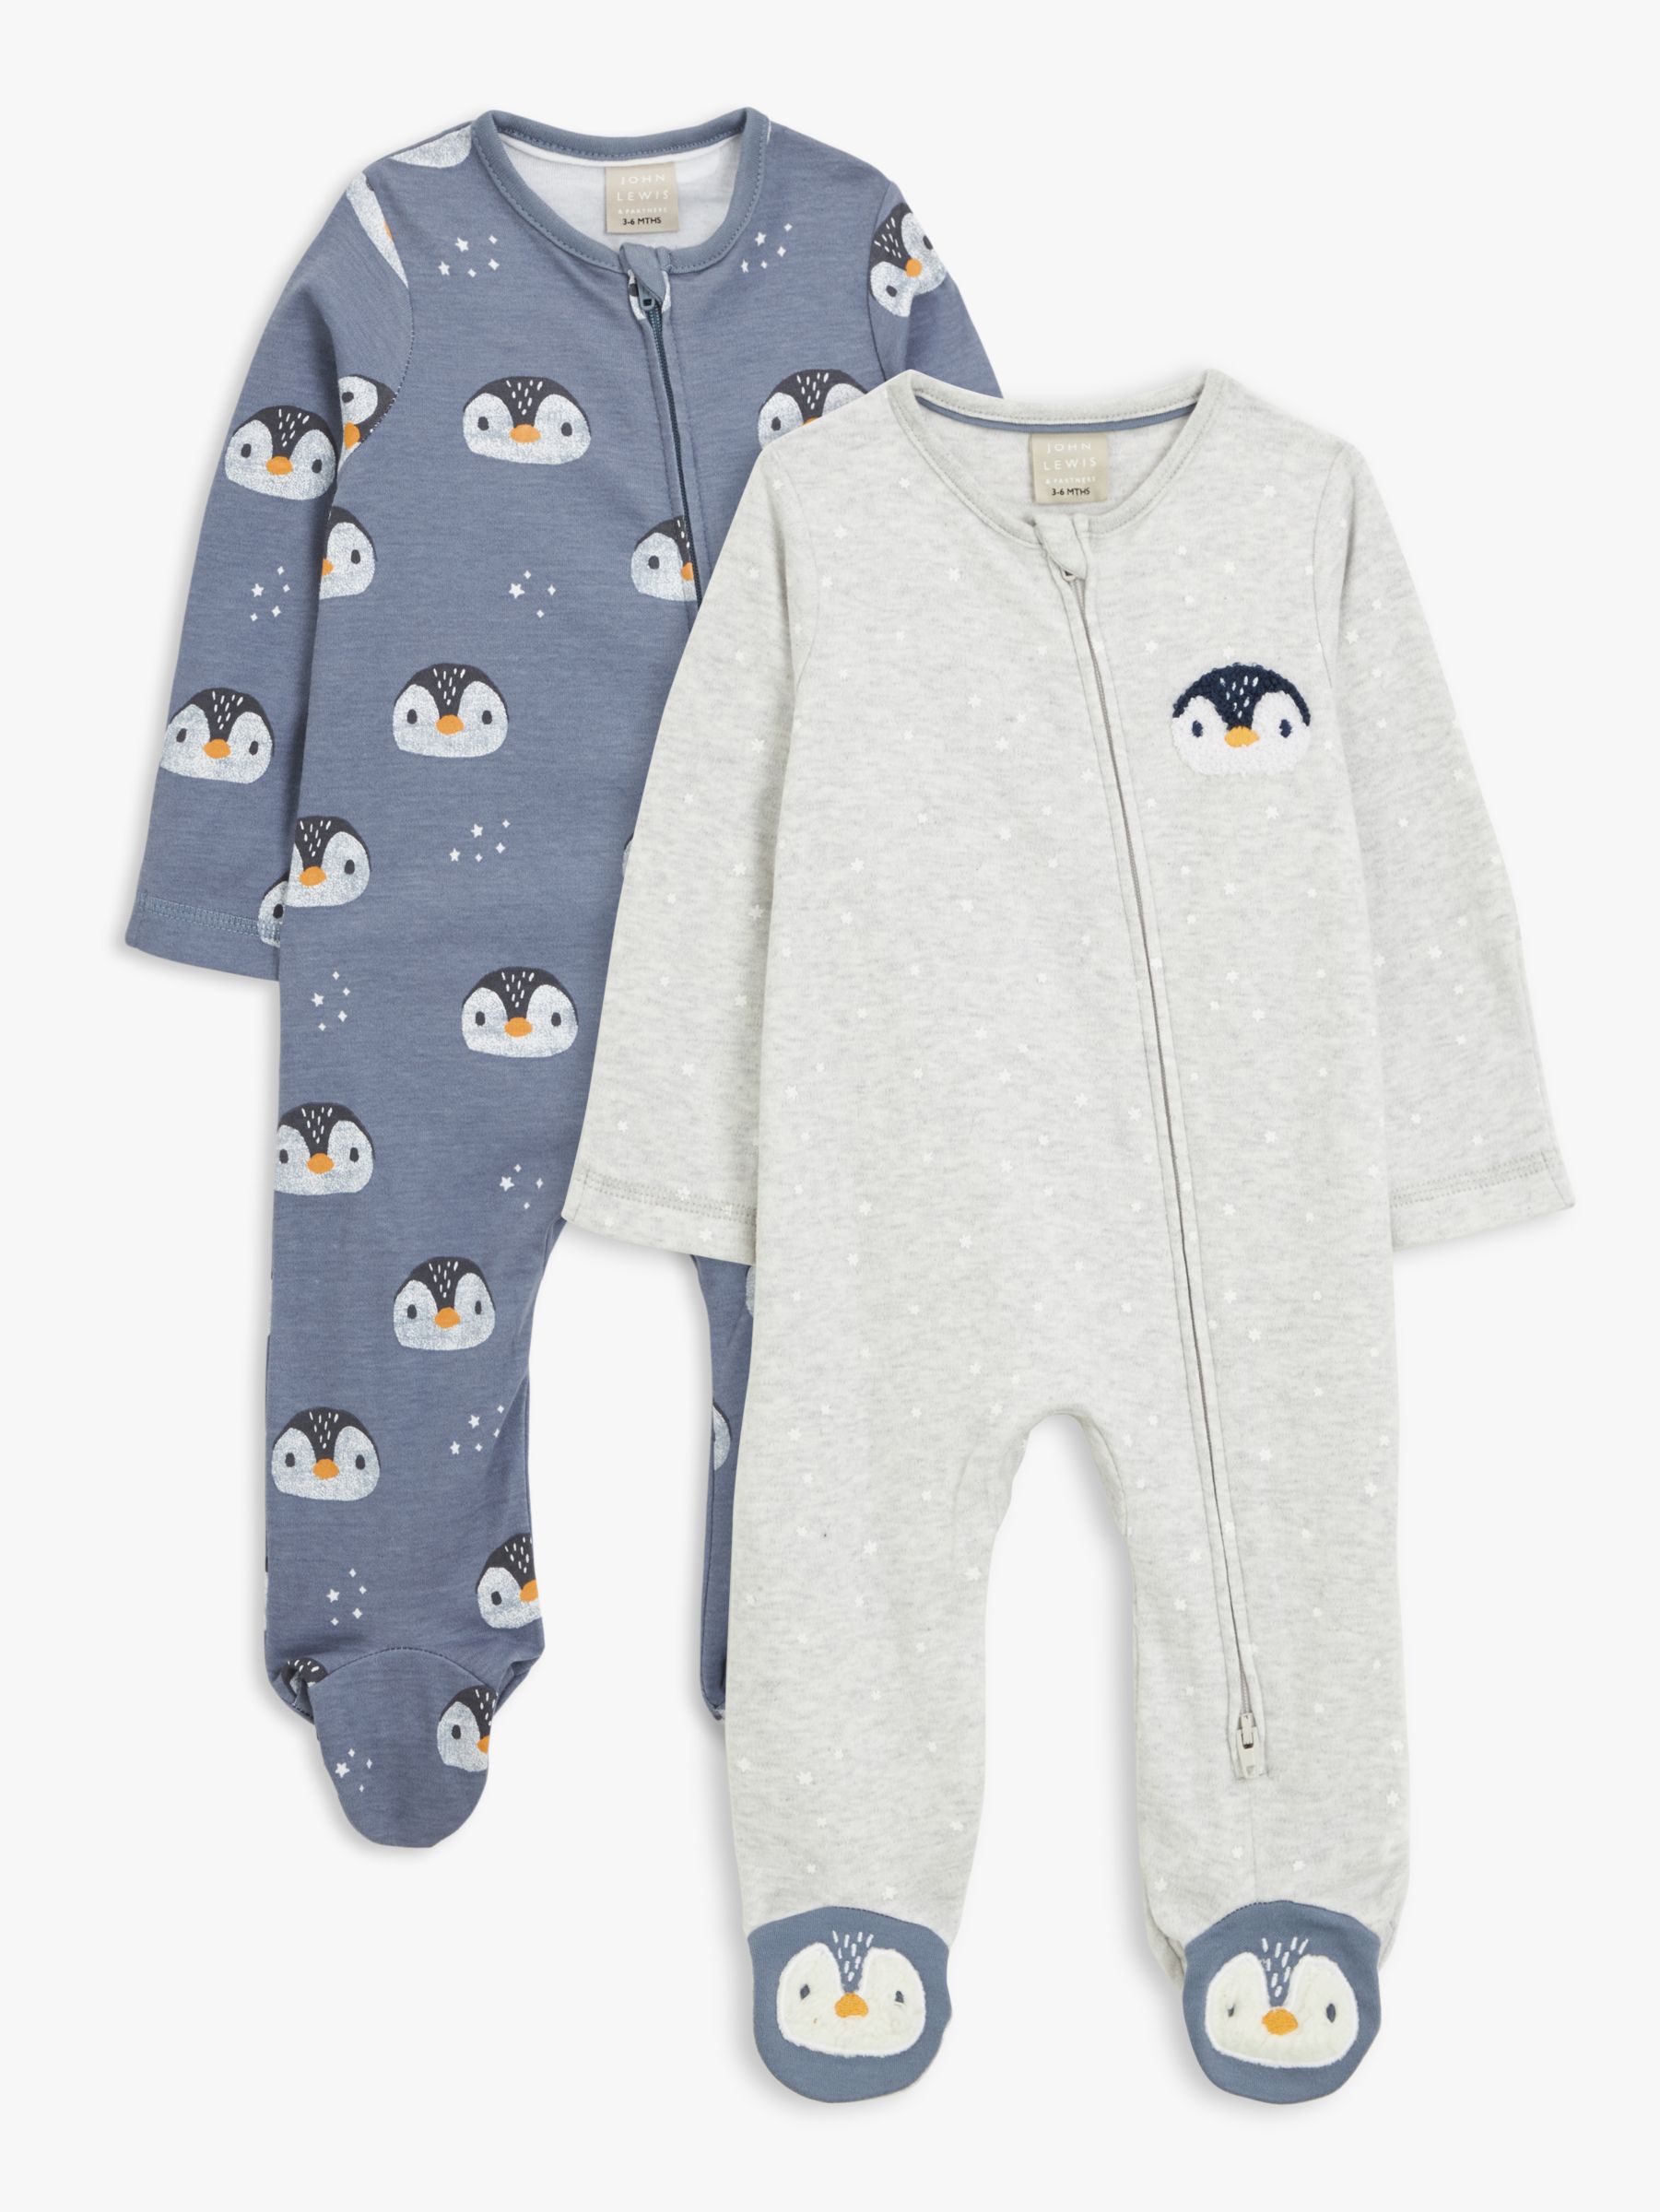 John Lewis Baby Penguin Sleepsuit, Pack of 2, Multi